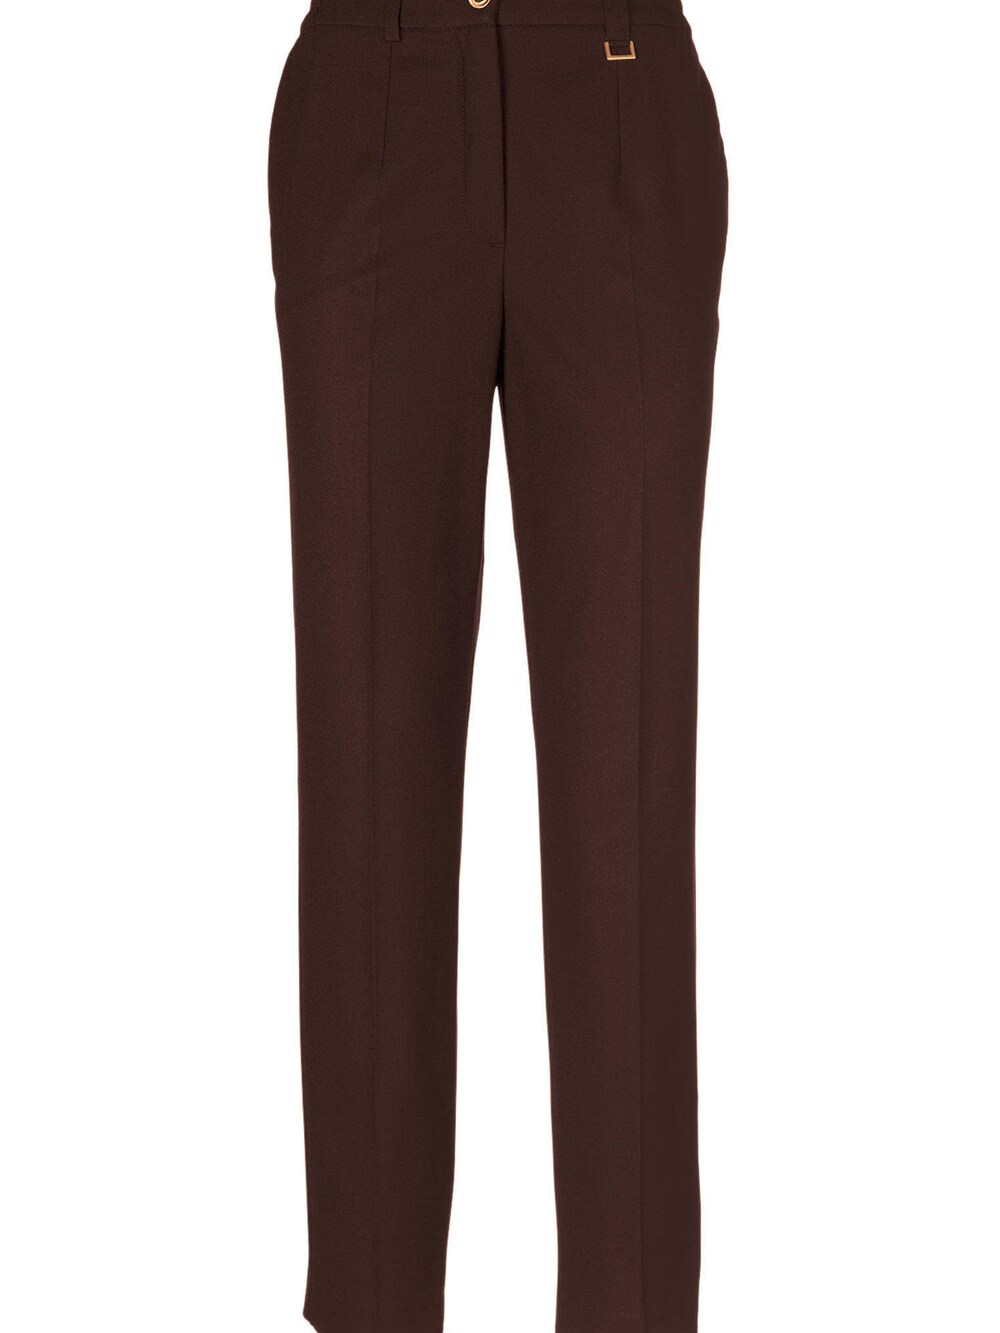 Узкие брюки Goldner ANNA, коричневый